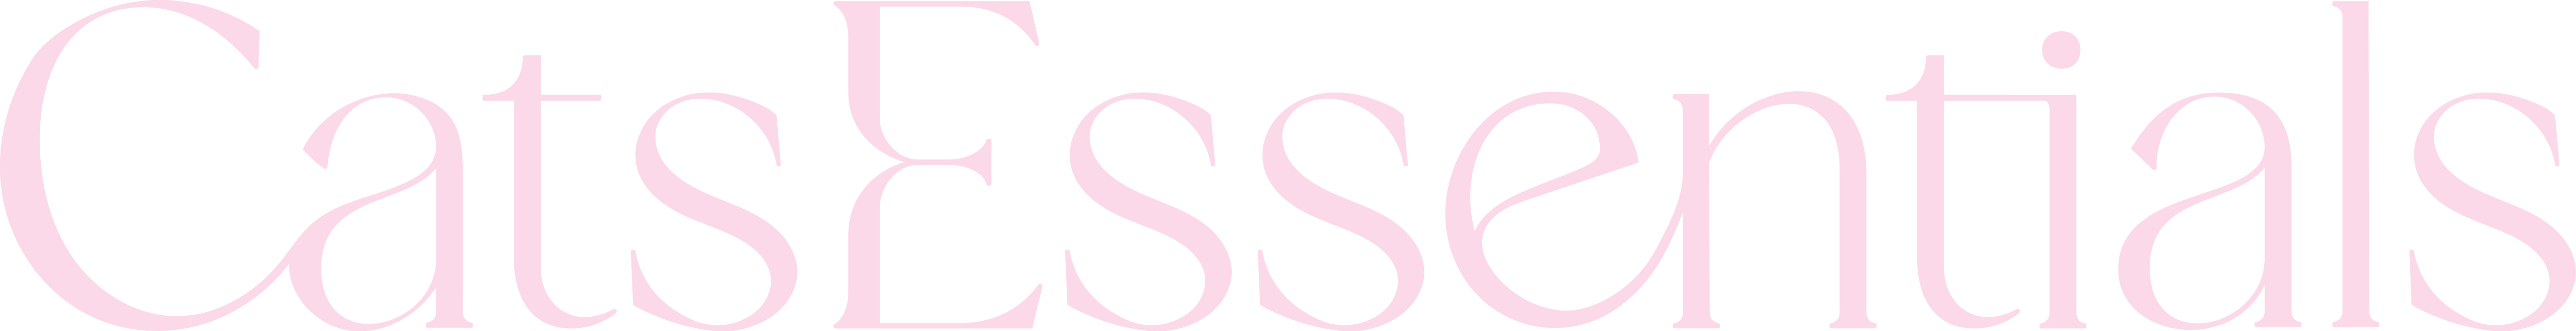 CatsEssentials logo pink